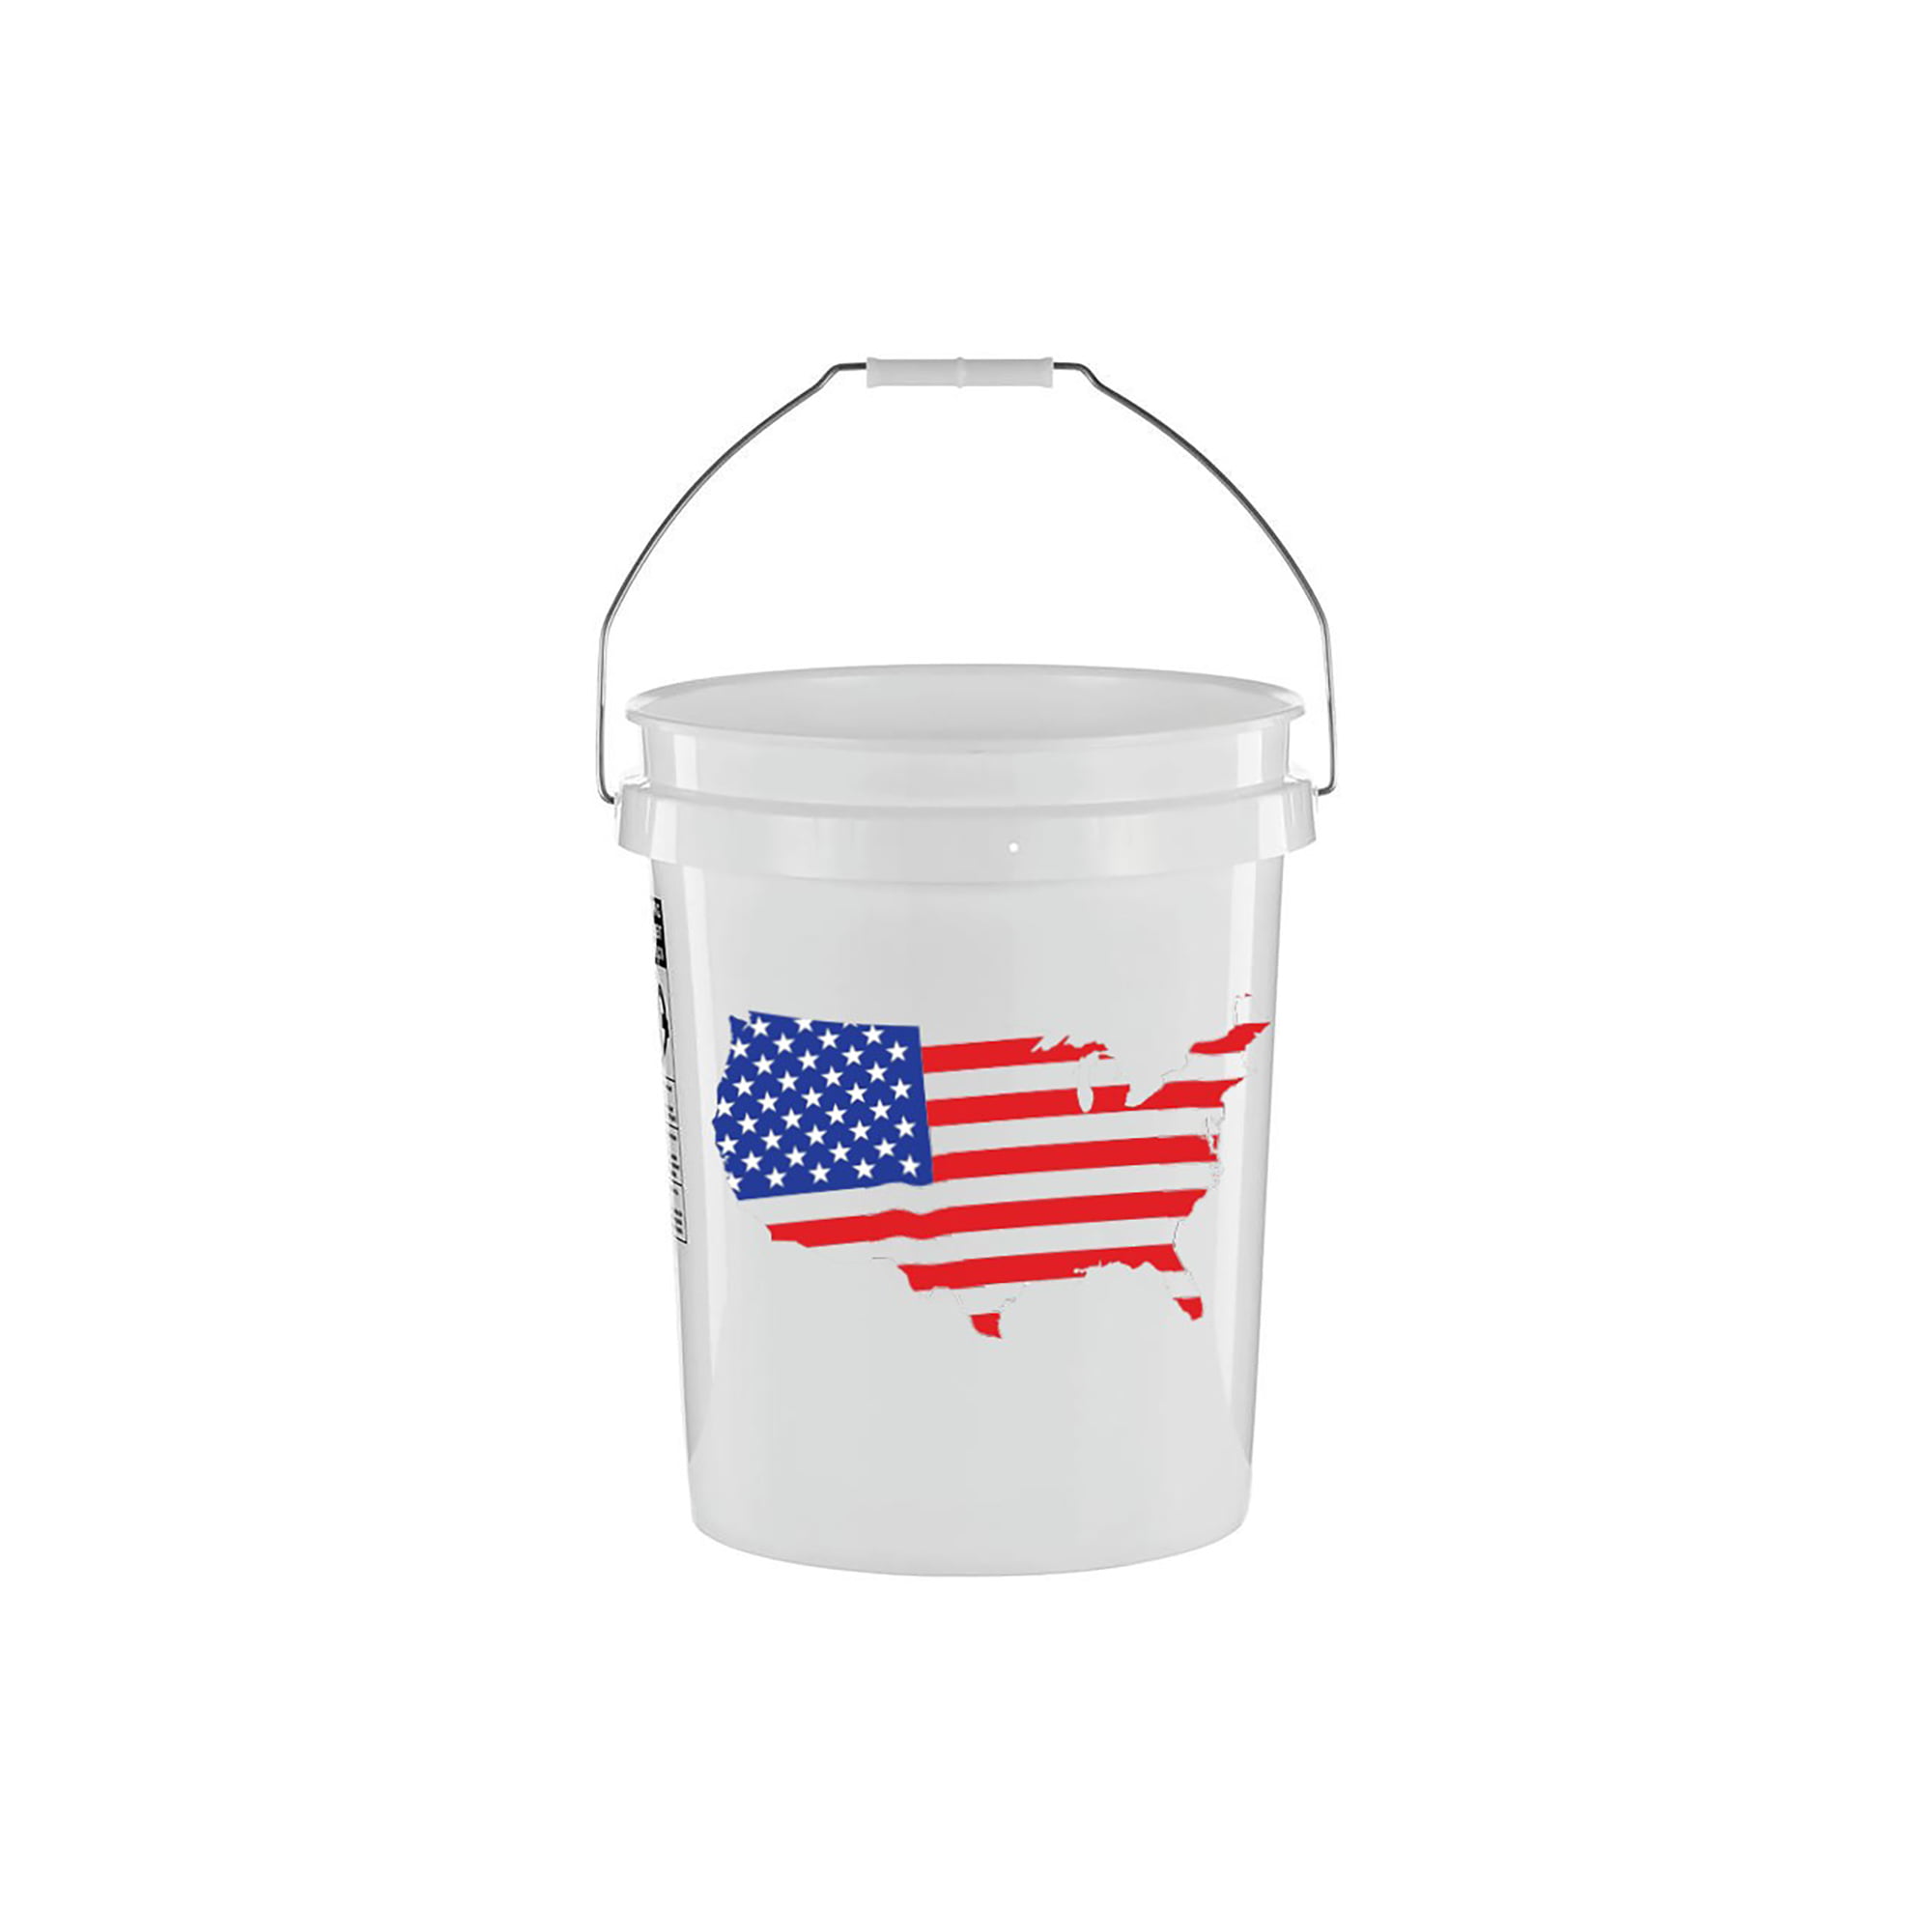 United Solutions 5 Gallon US Flag Bucket $1 YMMV